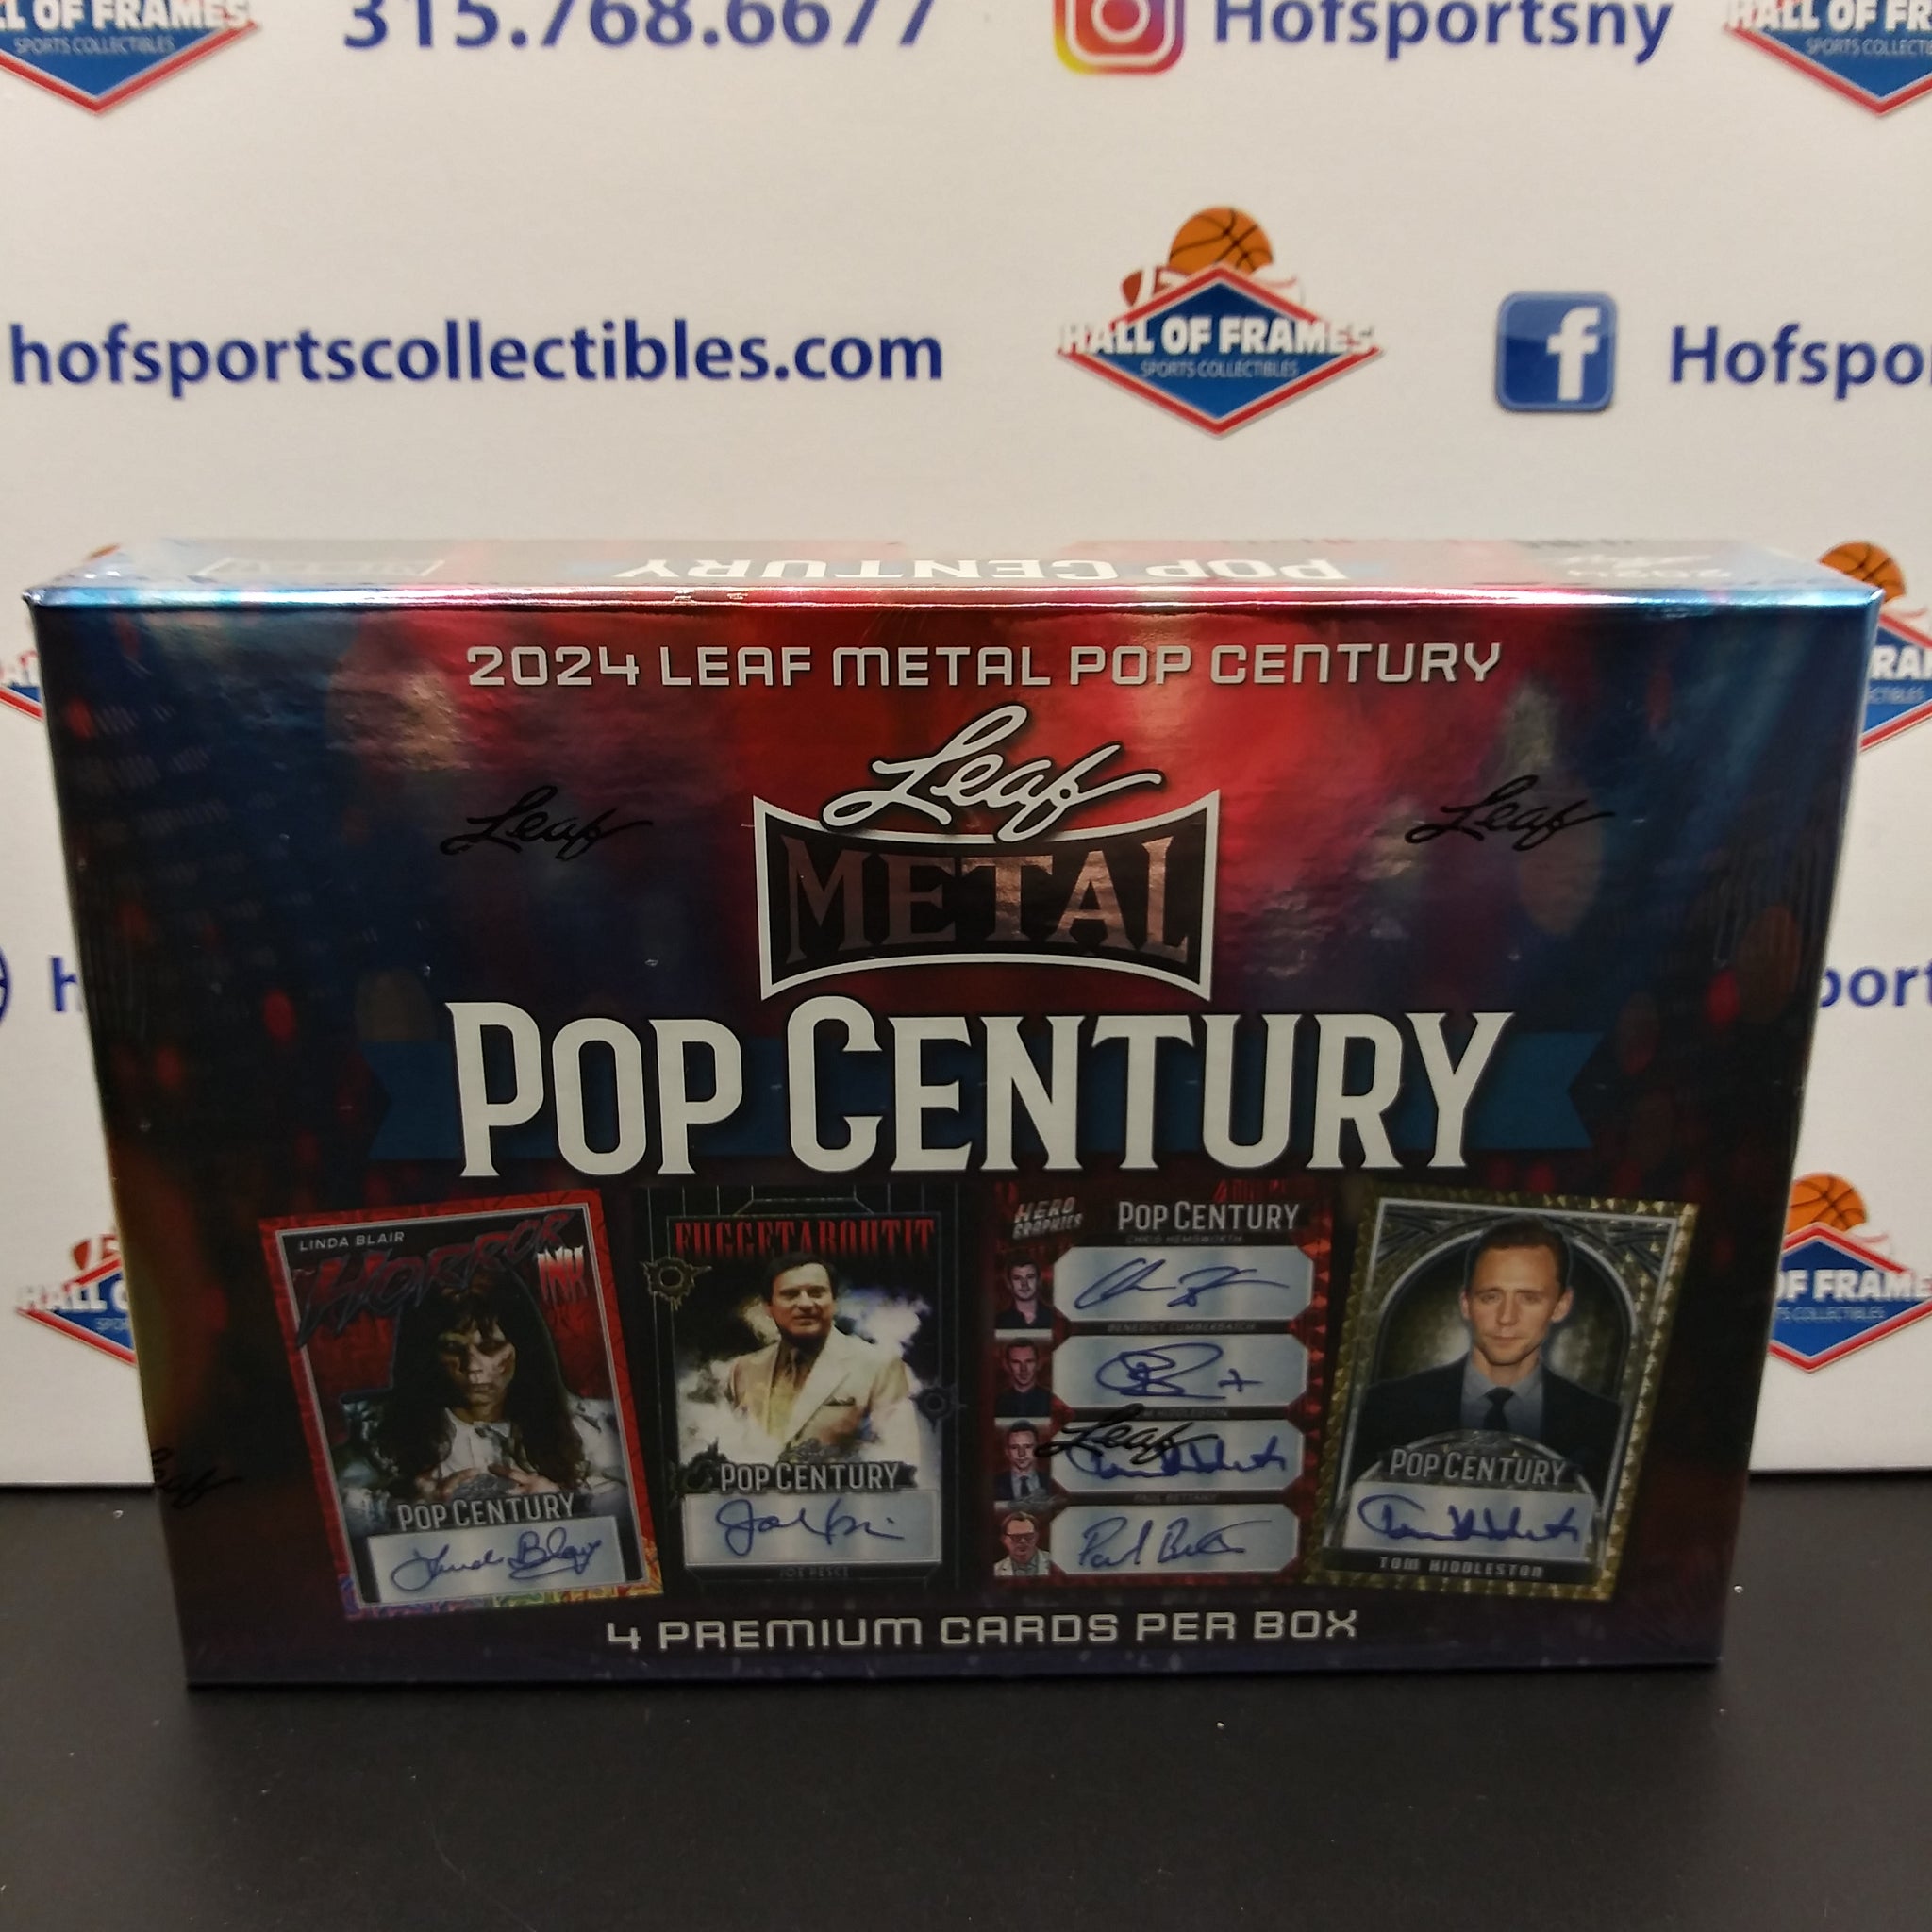 2024 LEAF METAL POP CENTURY HOBBY BOX! 4 PREMIUM CARDS PER BOX!